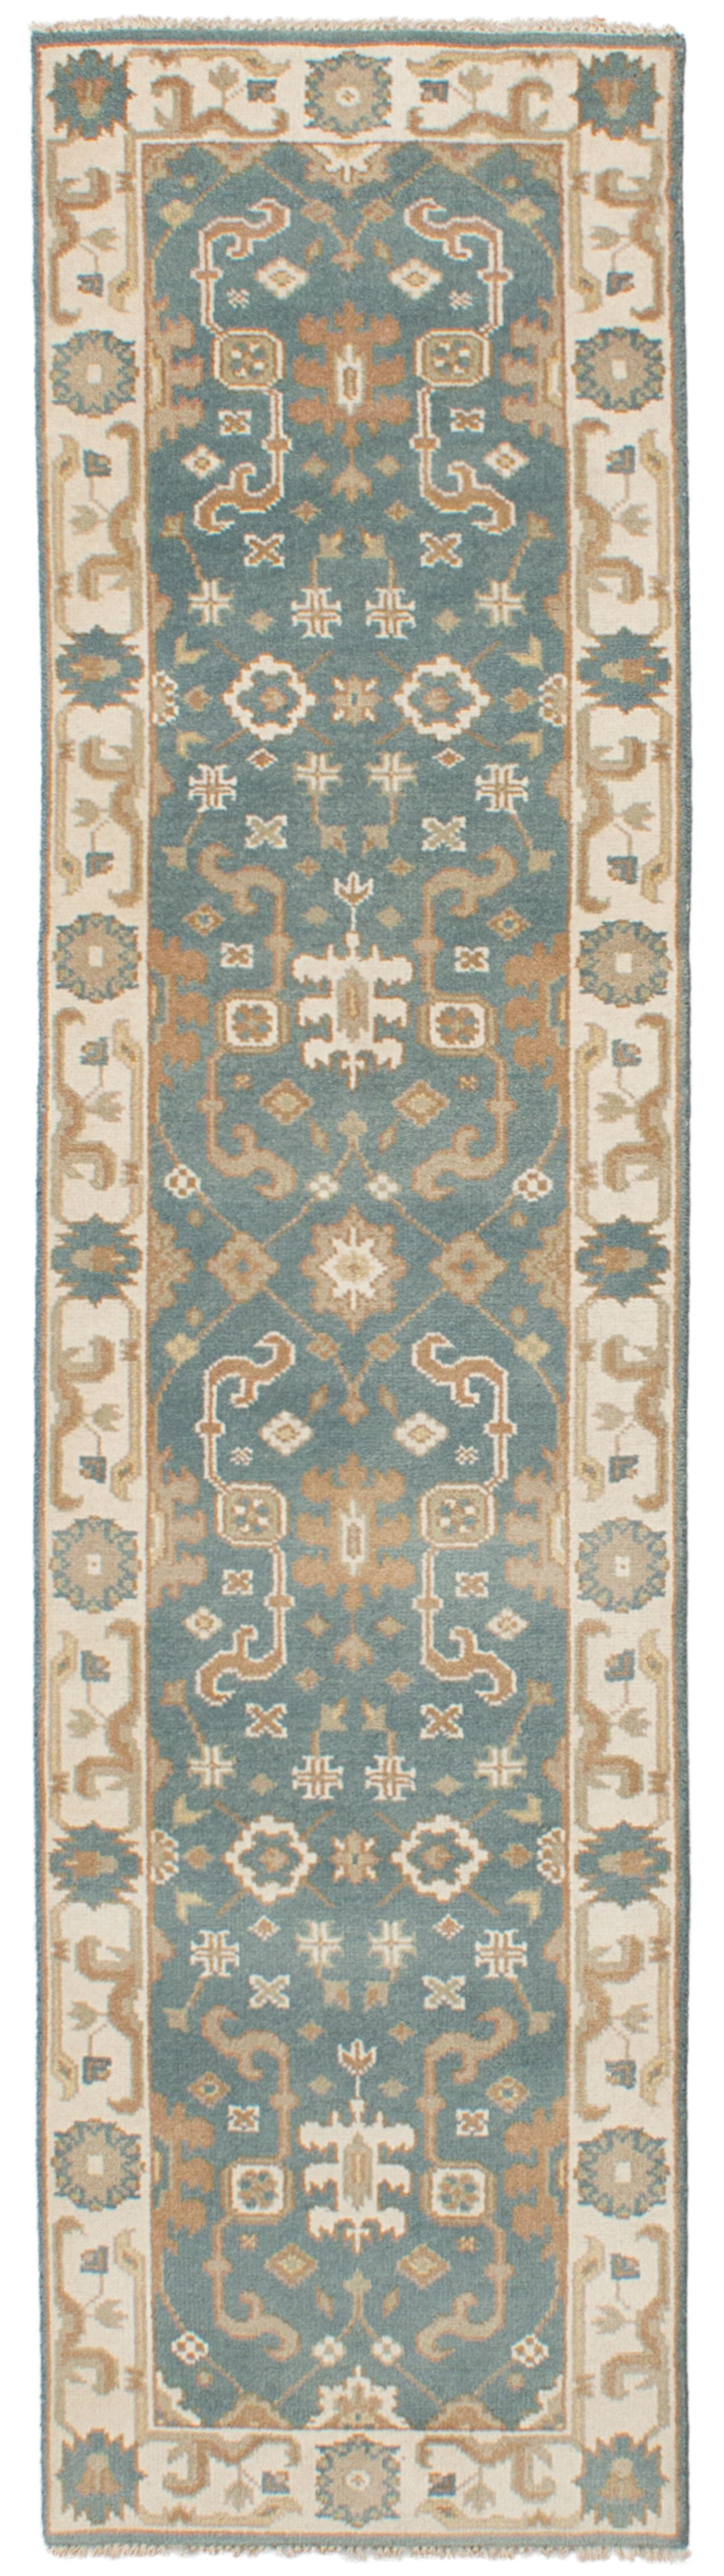 Hand-knotted Royal Ushak Turquoise Wool Rug 2'6" x 10'0" Size: 2'6" x 10'0"  